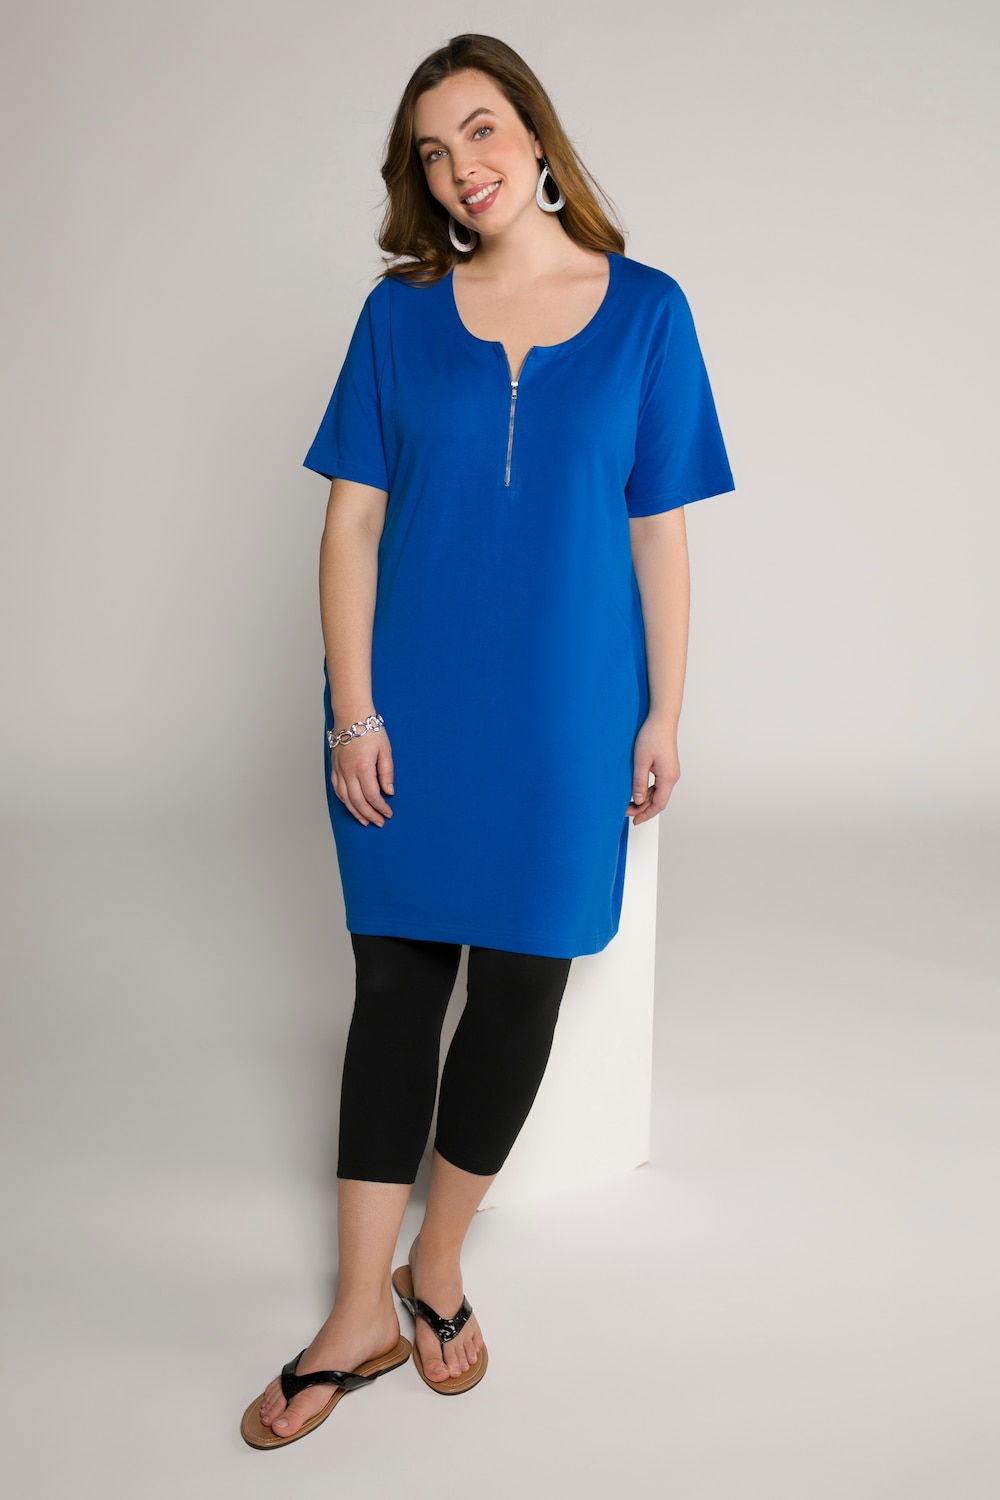 Plus Size Zipper Pocket Swing Cotton Knit Tunic, Woman, blue, size: 20/22, cotton, Ulla Popken